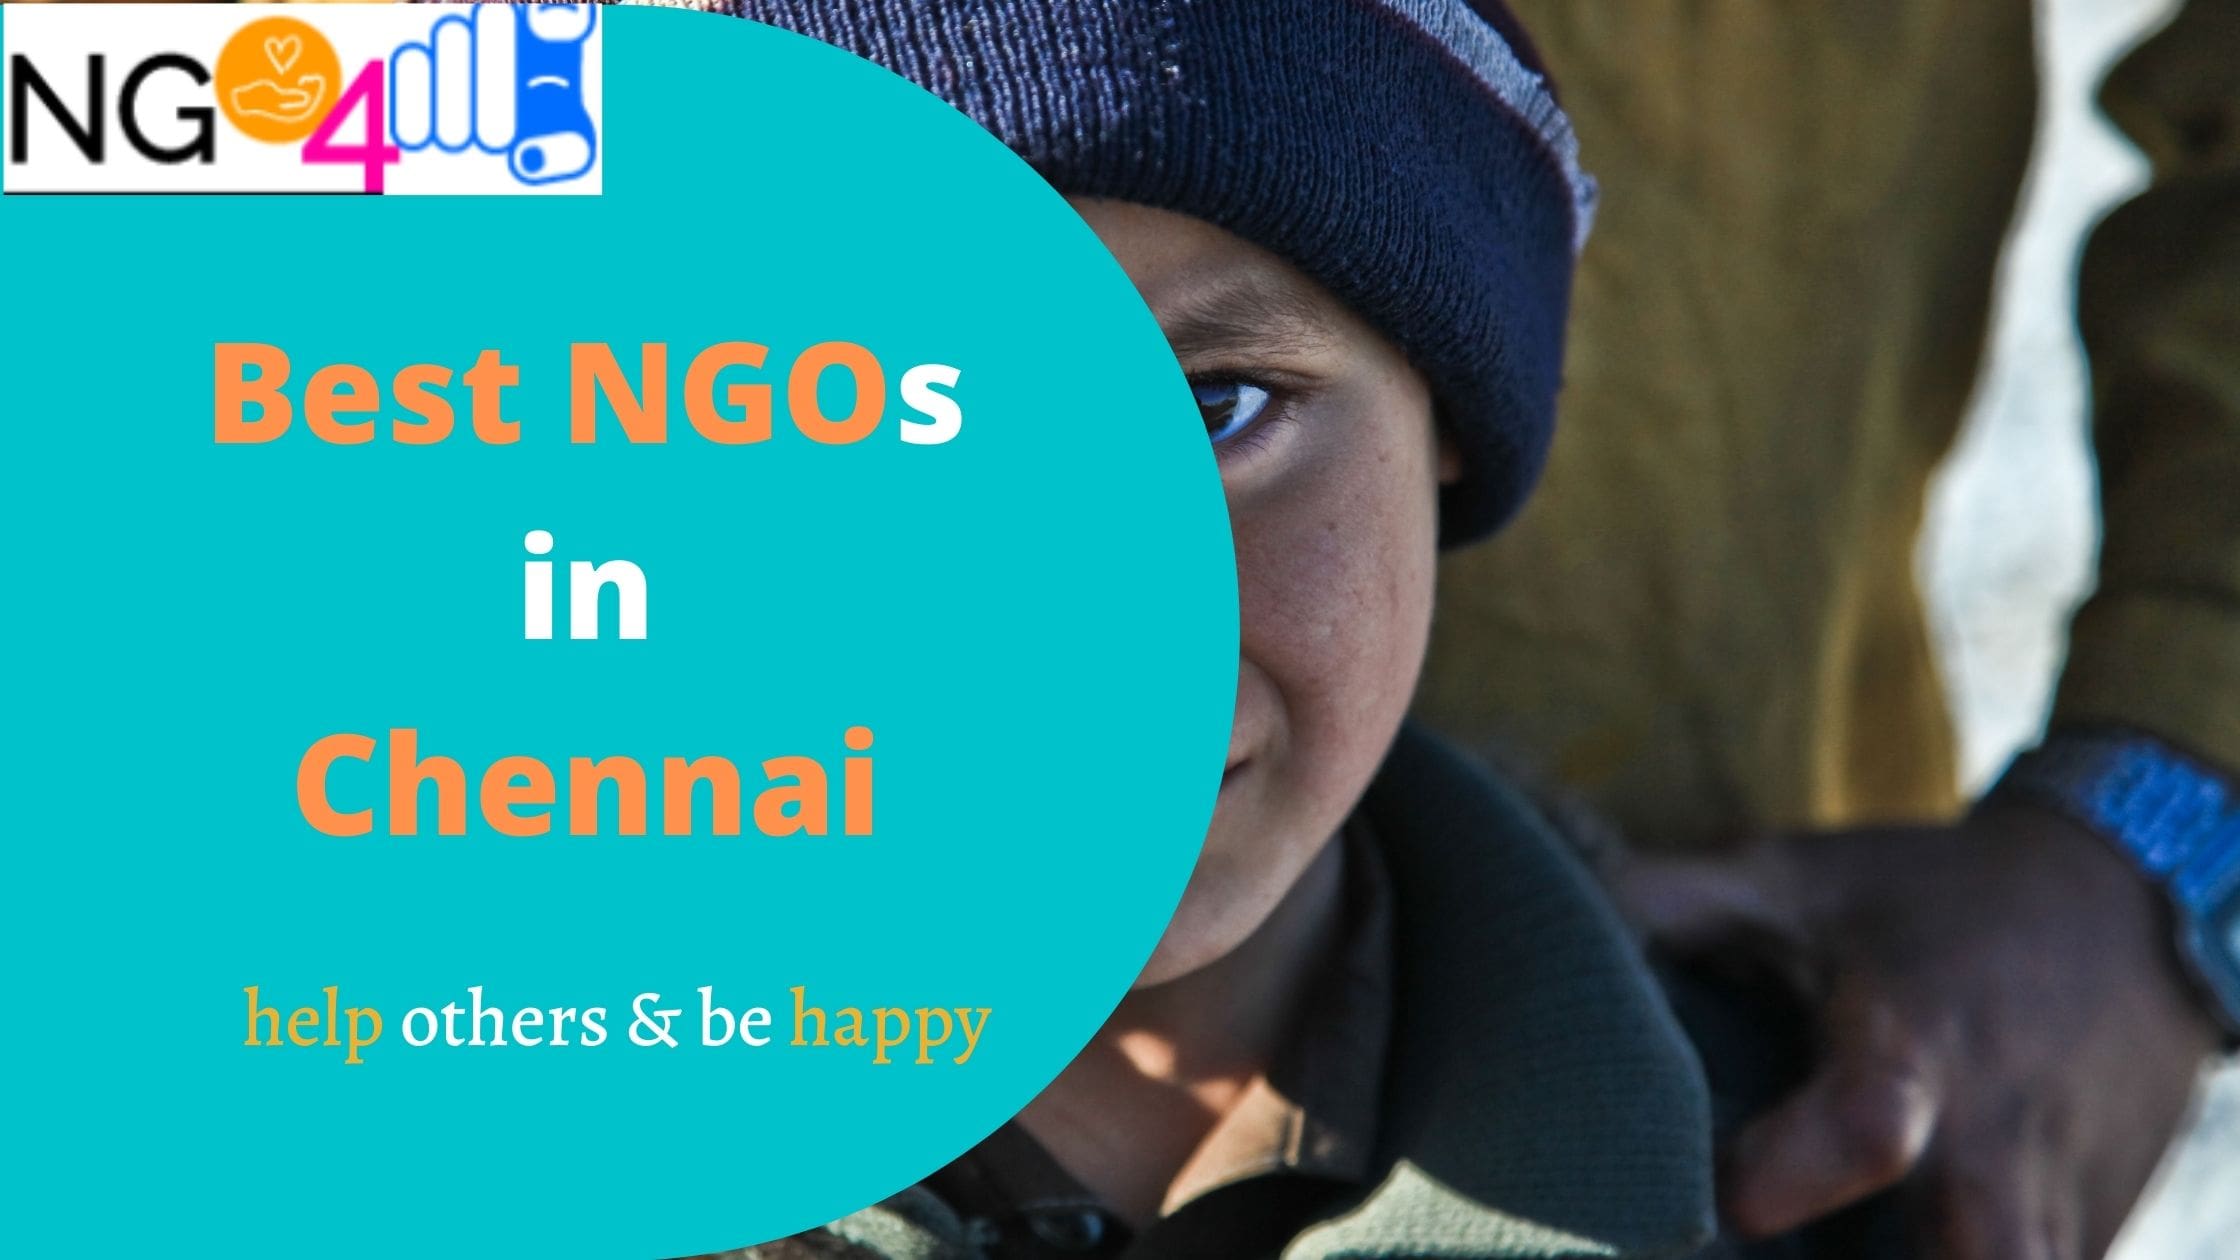 NGO In Chennai, Tamil Nadu - 1670+ NGOs List - NGO4YOU